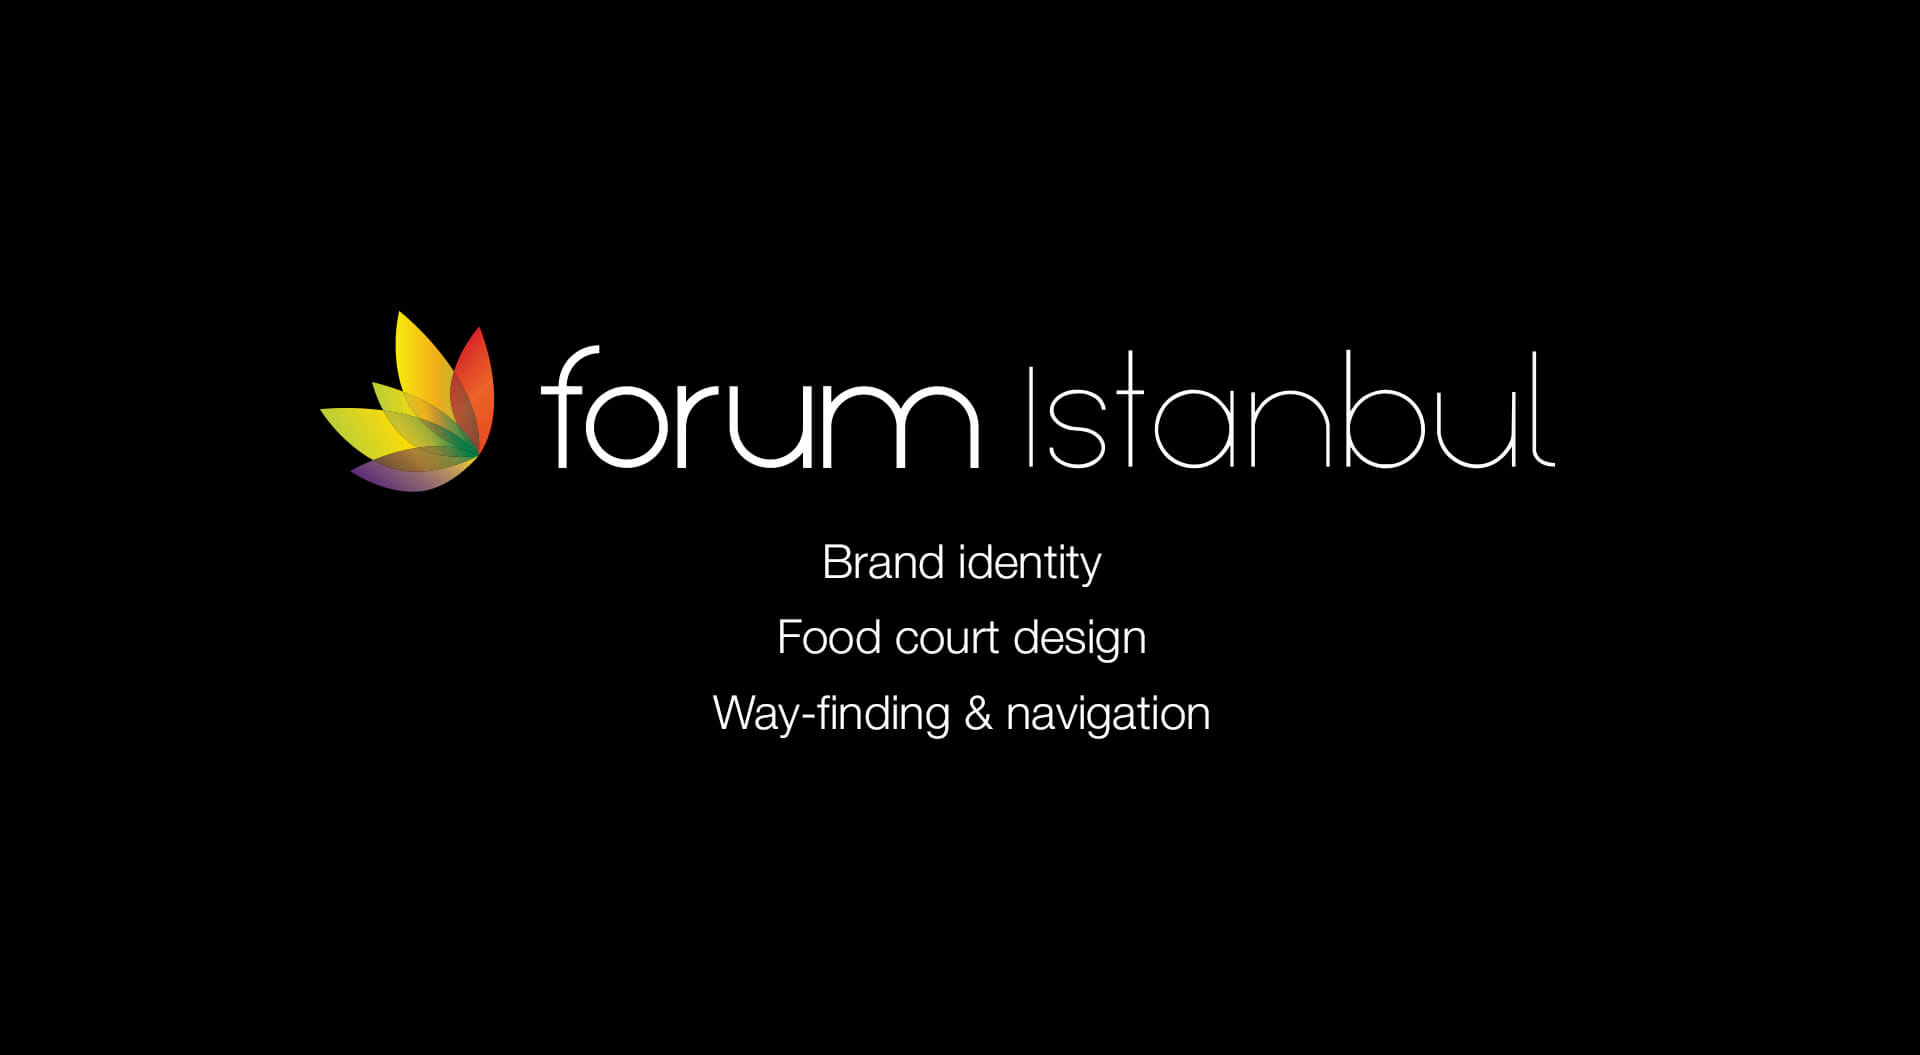 Forum Istanbul Turkey shopping mall brand identity